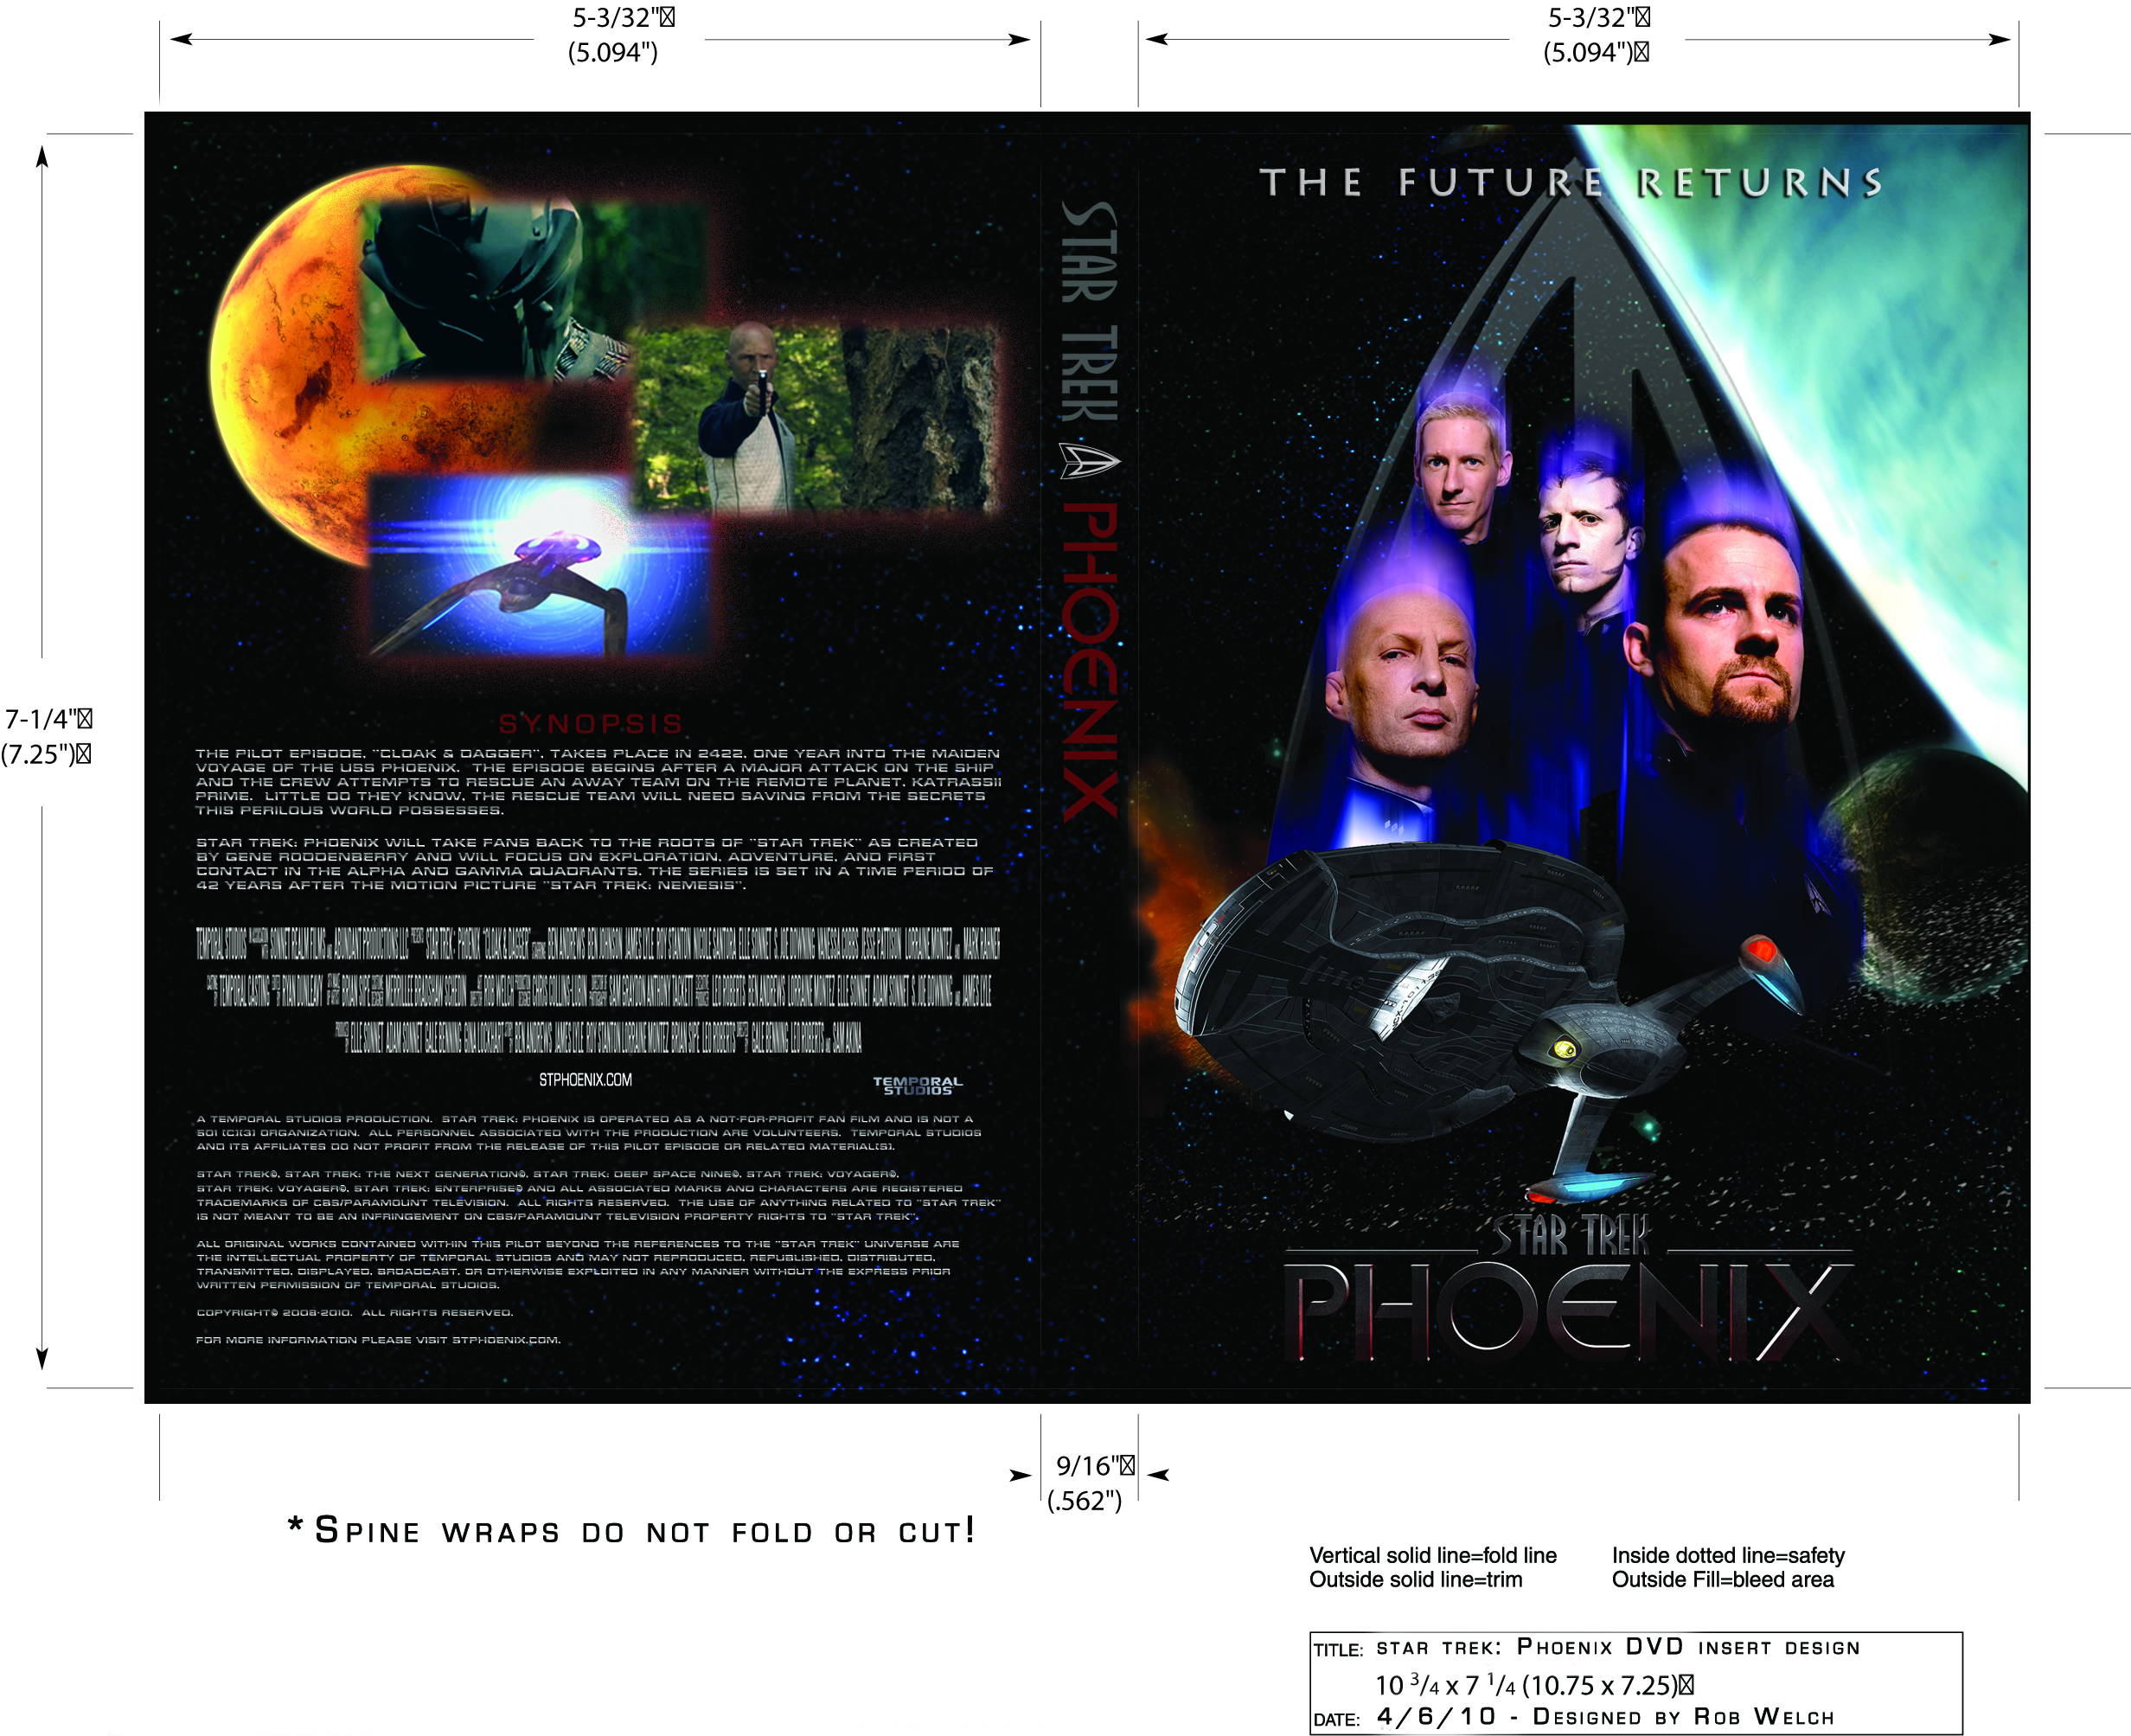 STP DVD inset Design 4-6-10.jpg